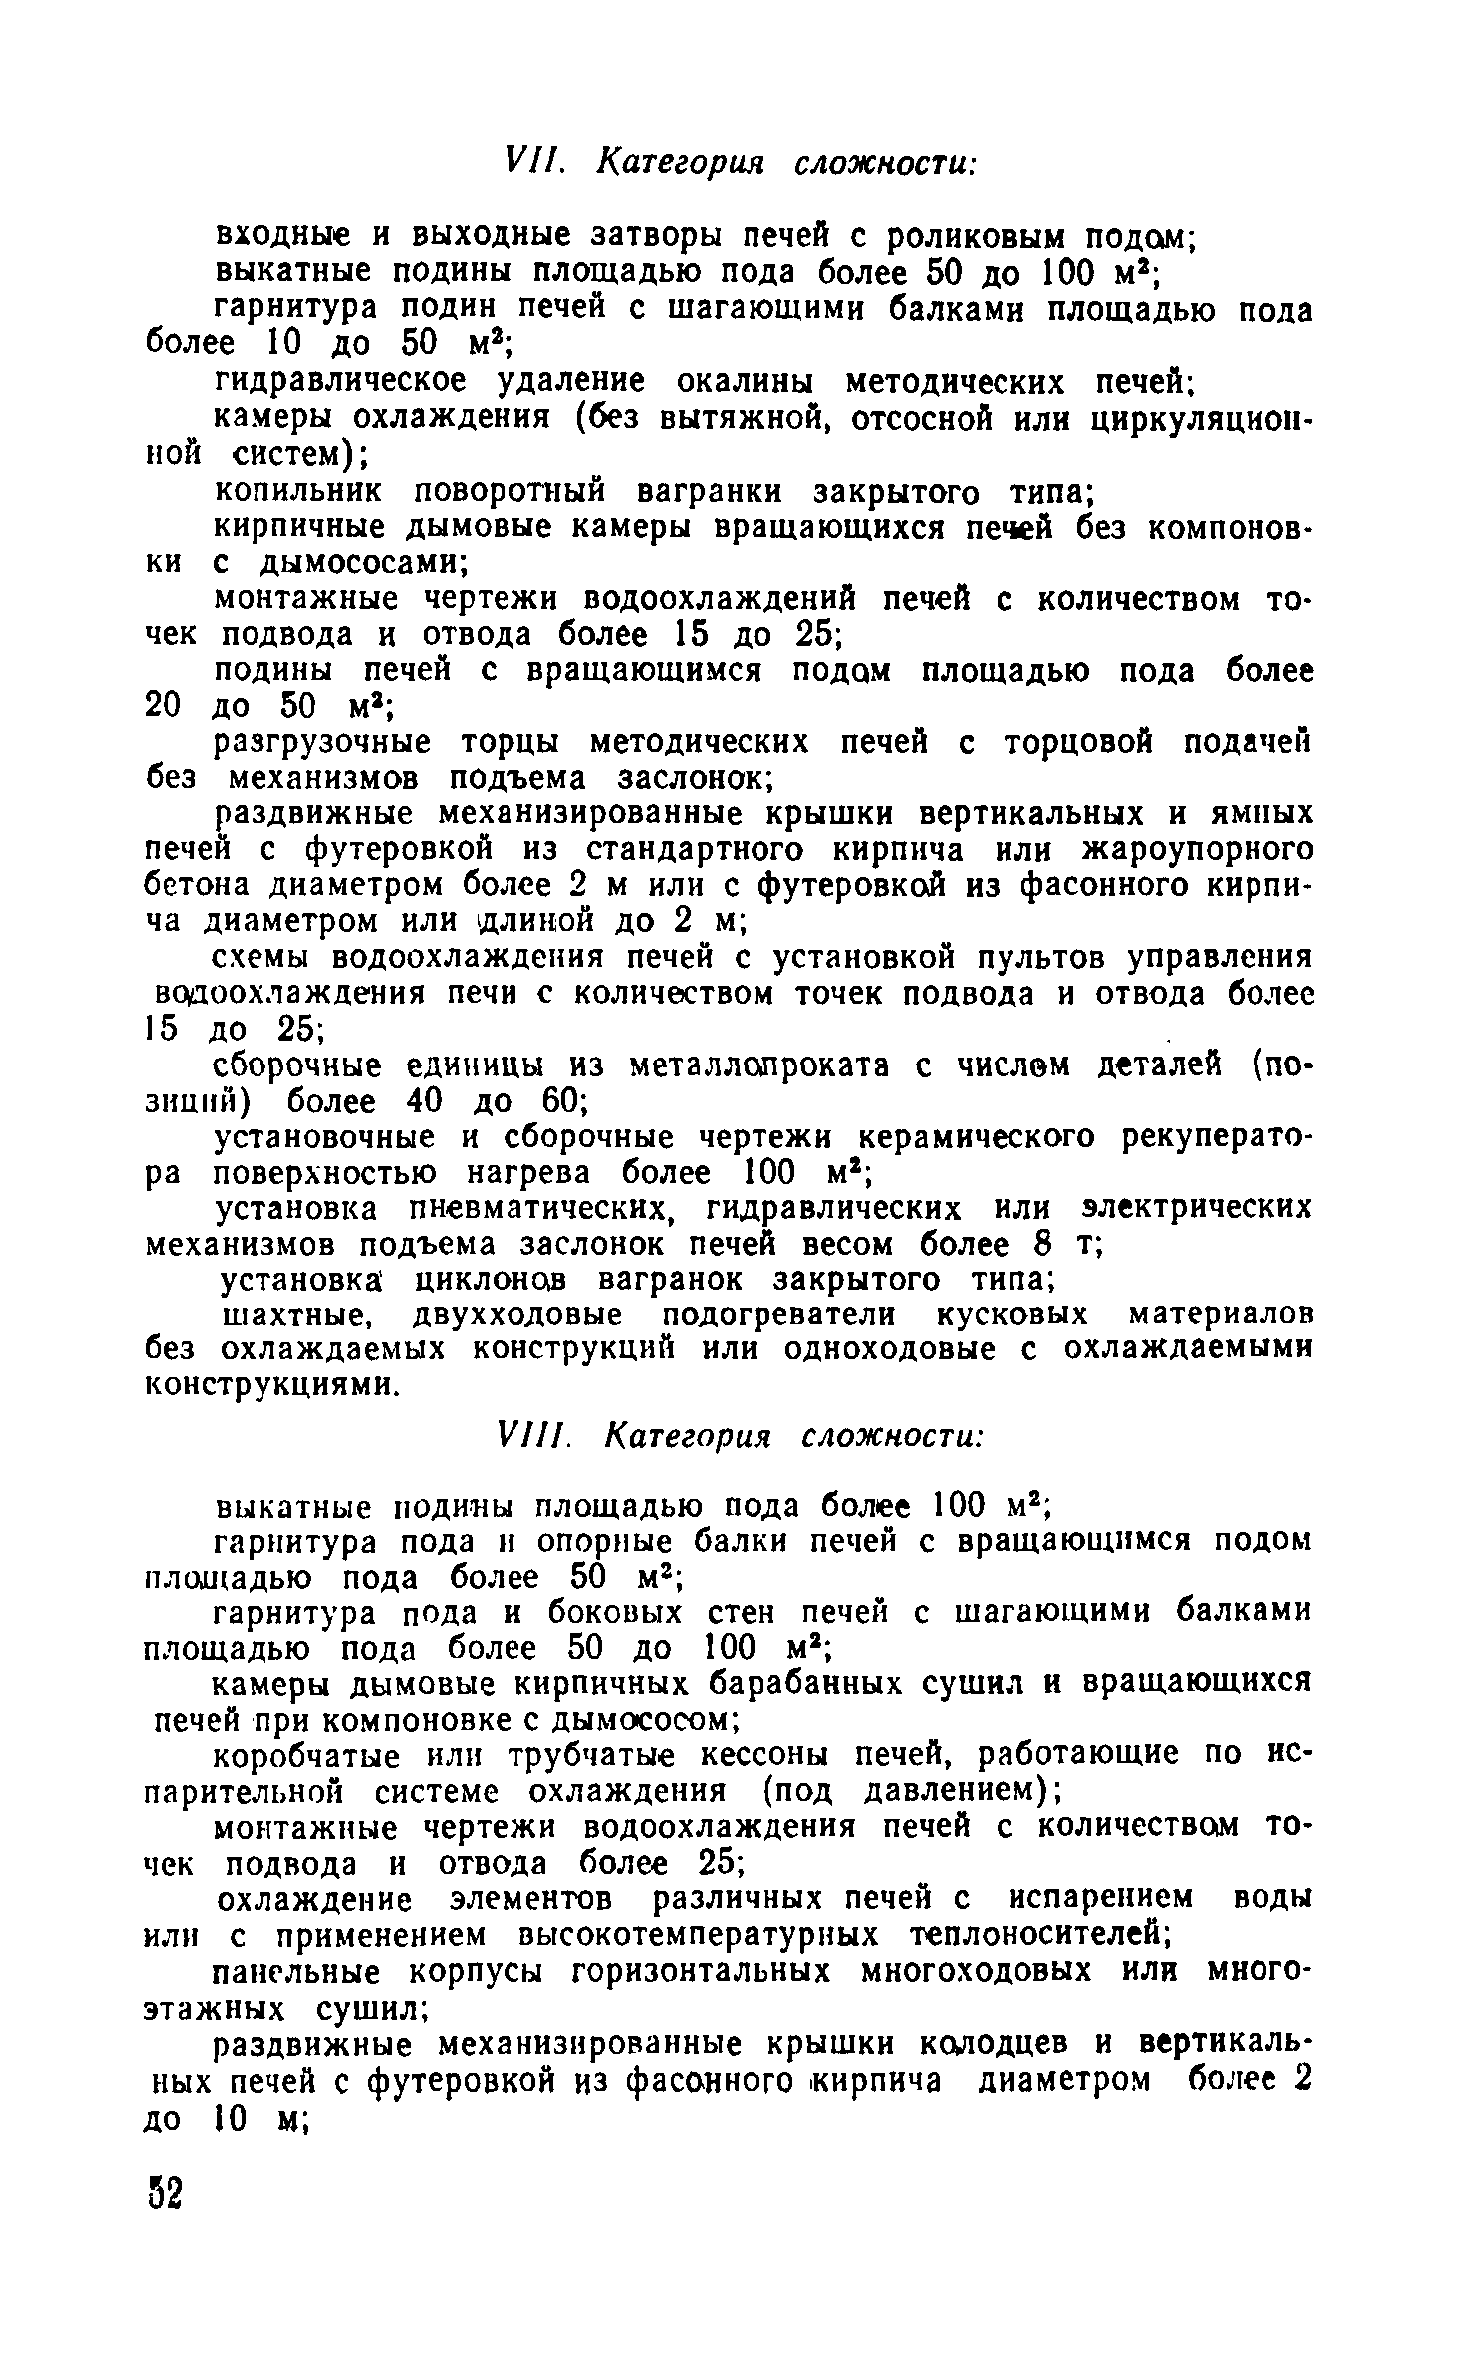 ЕНВиР-П Часть 21